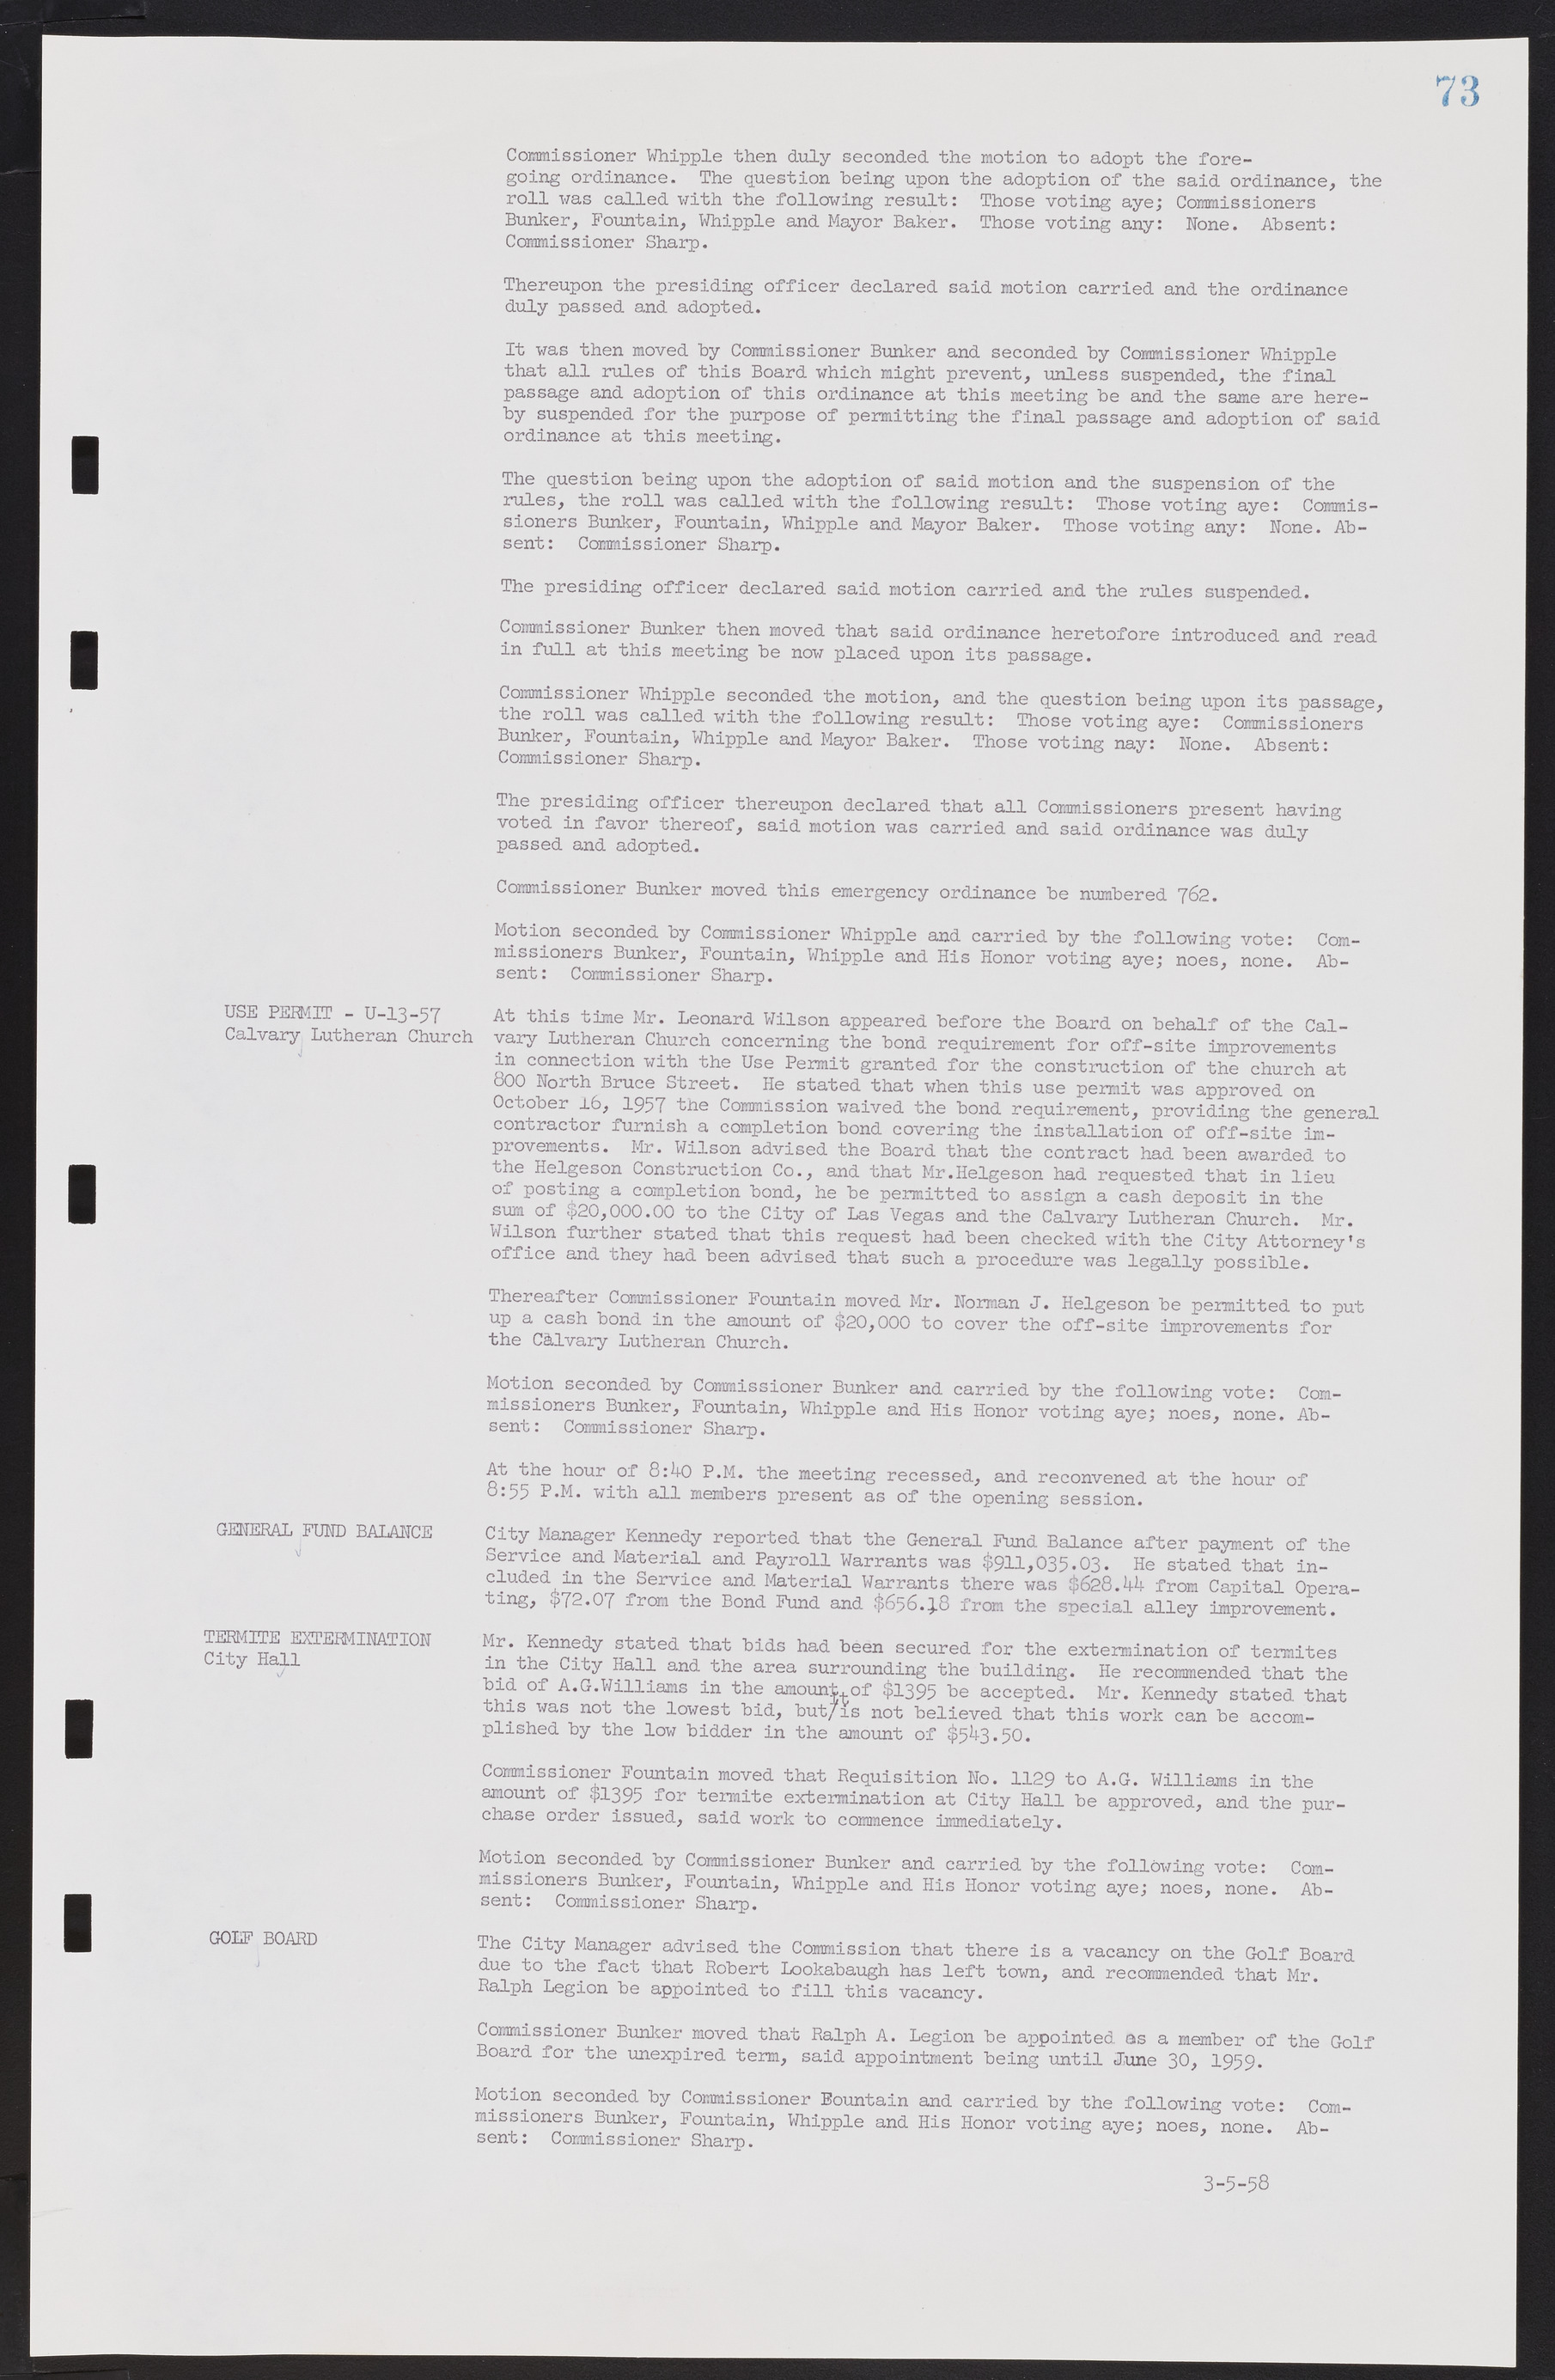 Las Vegas City Commission Minutes, November 20, 1957 to December 2, 1959, lvc000011-77